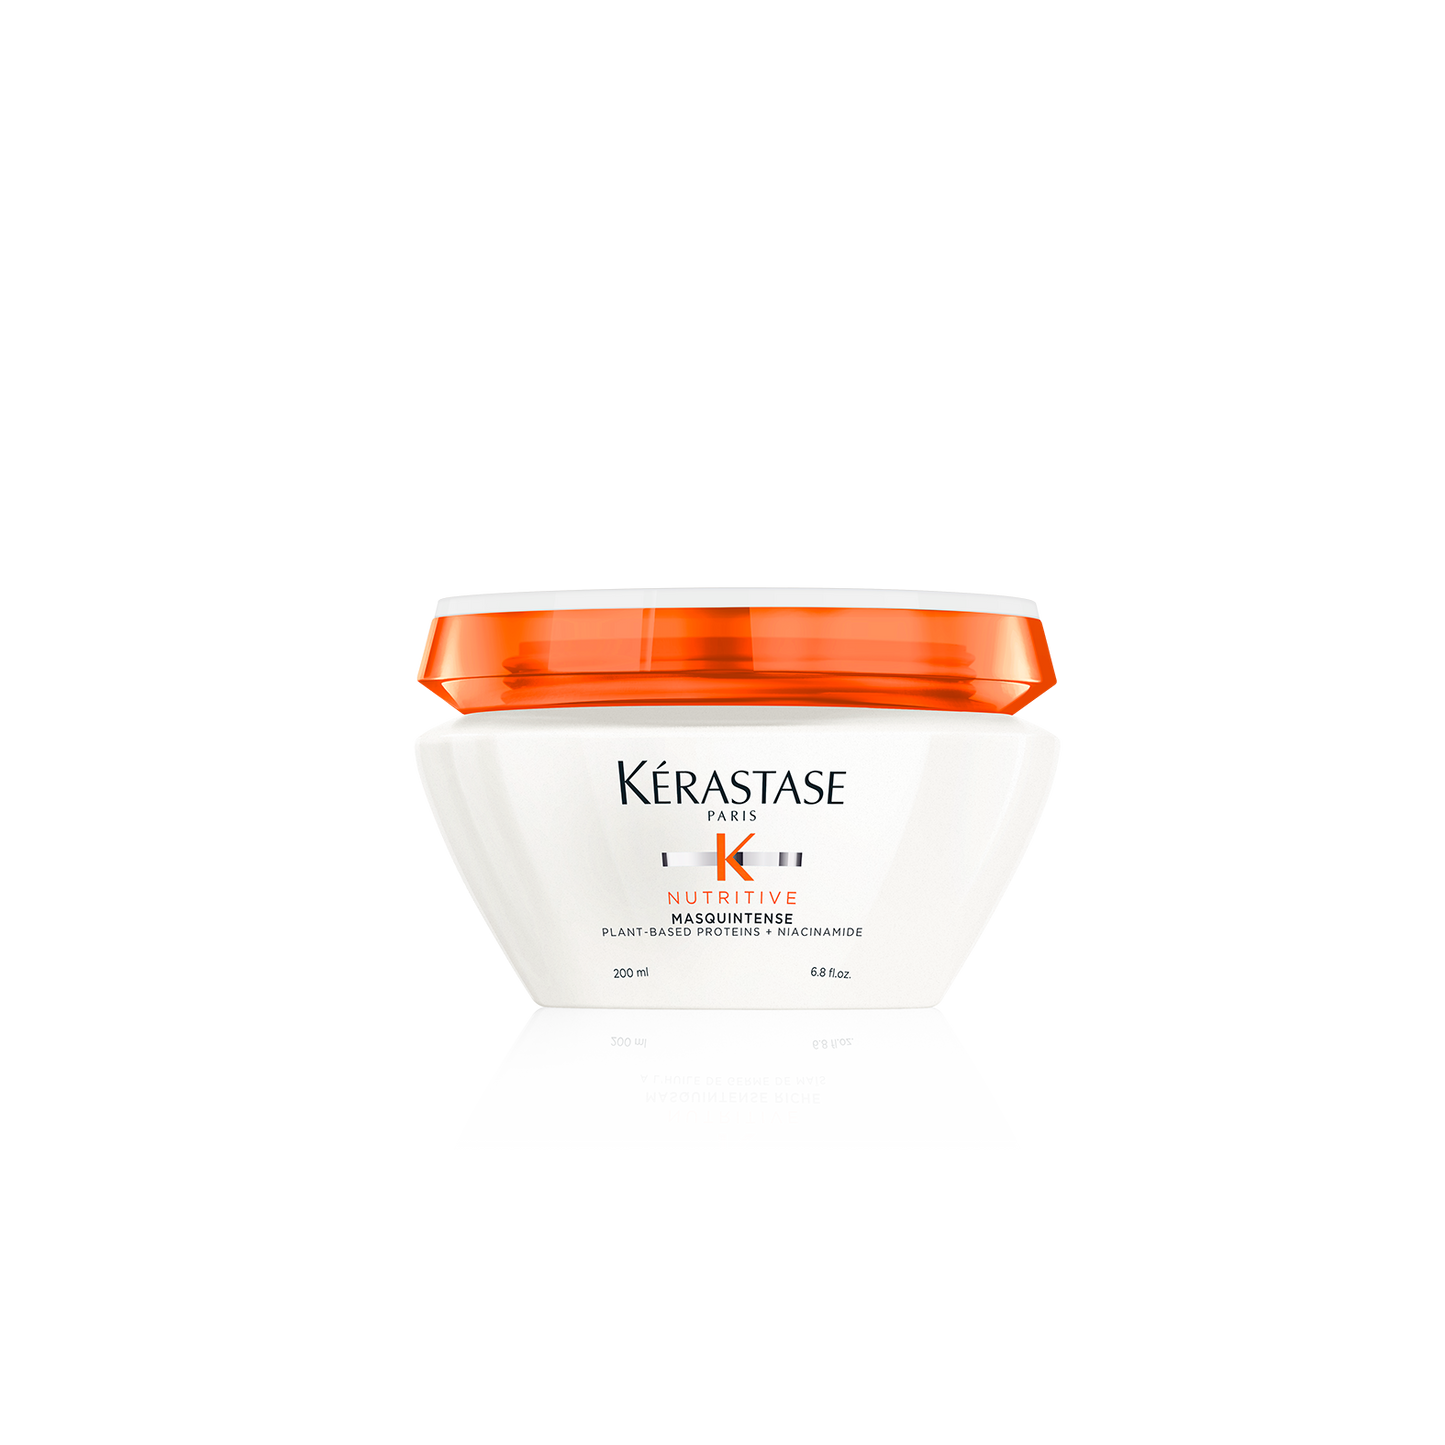 Kérastase Nutritive Masquintense Deep Nutrition Soft Mask for Very Dry, Fine to Medium Hair 200ml